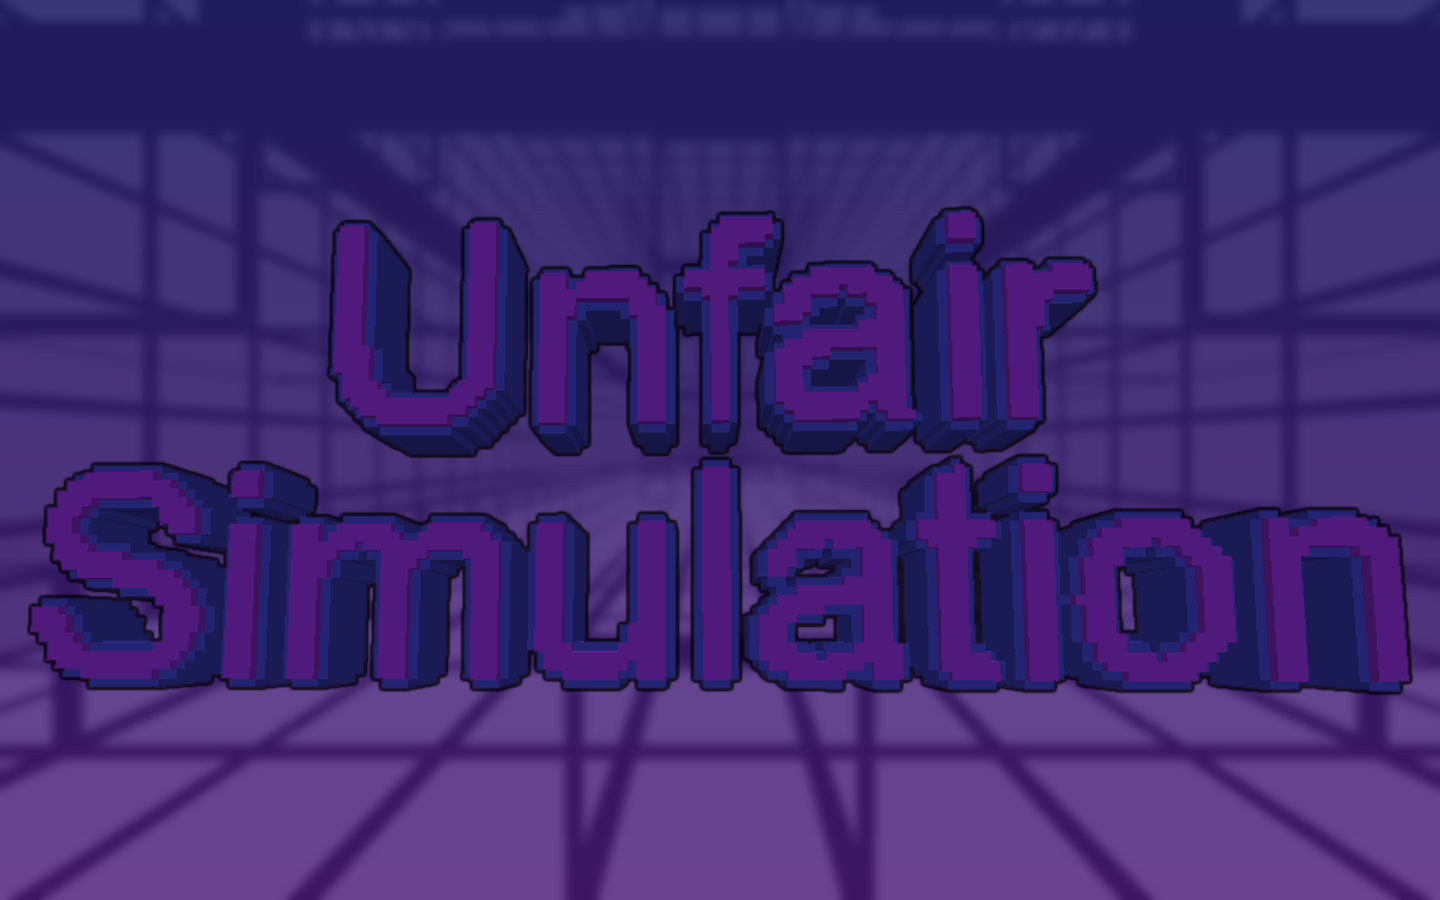 Download Unfair Simulation for Minecraft 1.16.3